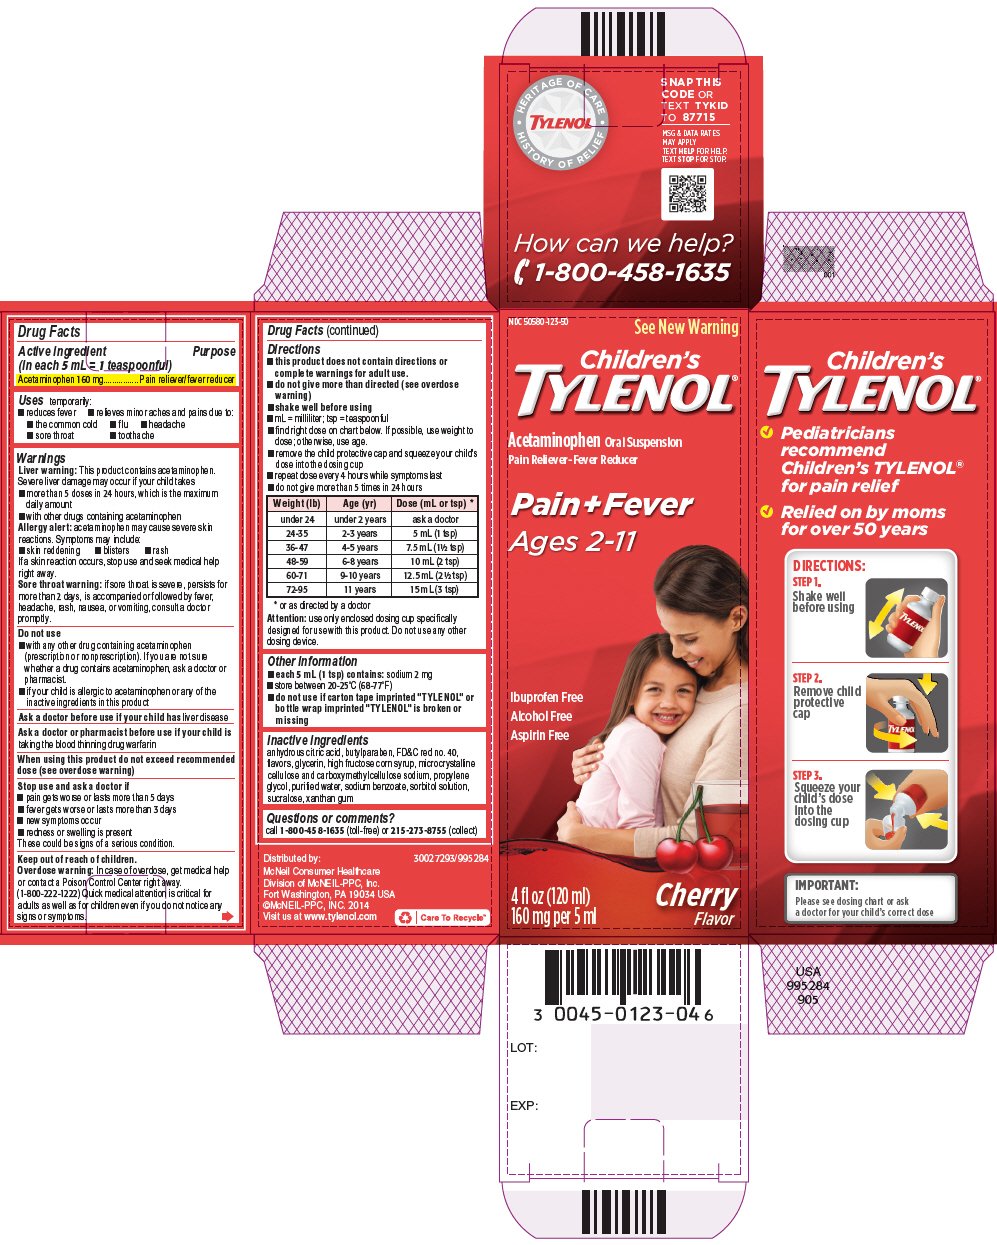 side effect of tylenol arthritis